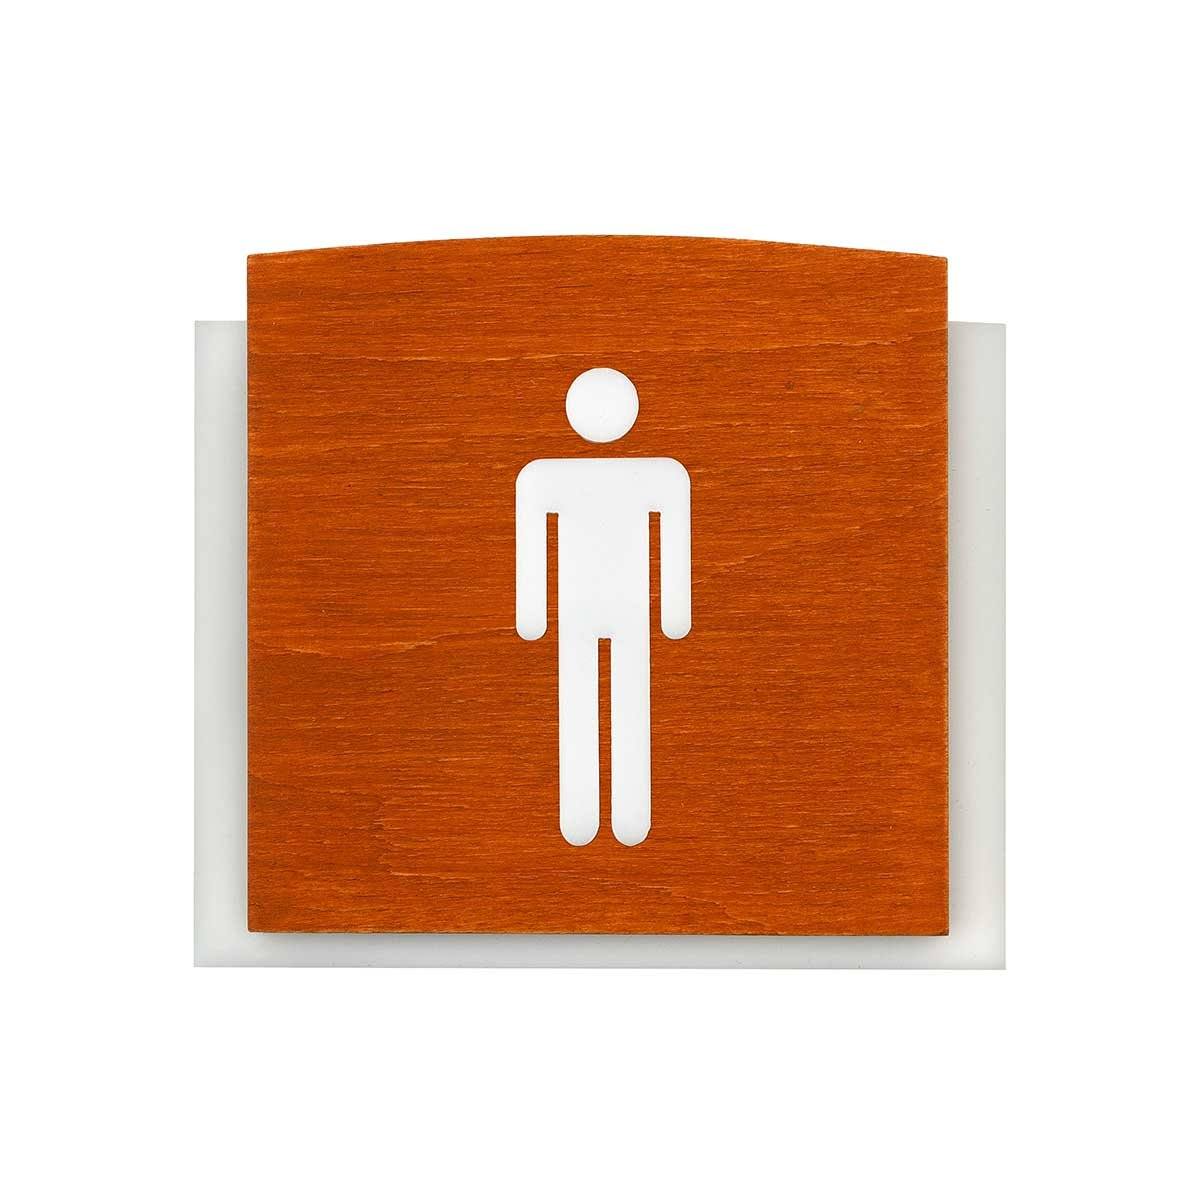 Wood Bathrooms Door Signs for Man Bathroom Signs Walhunt Bsign